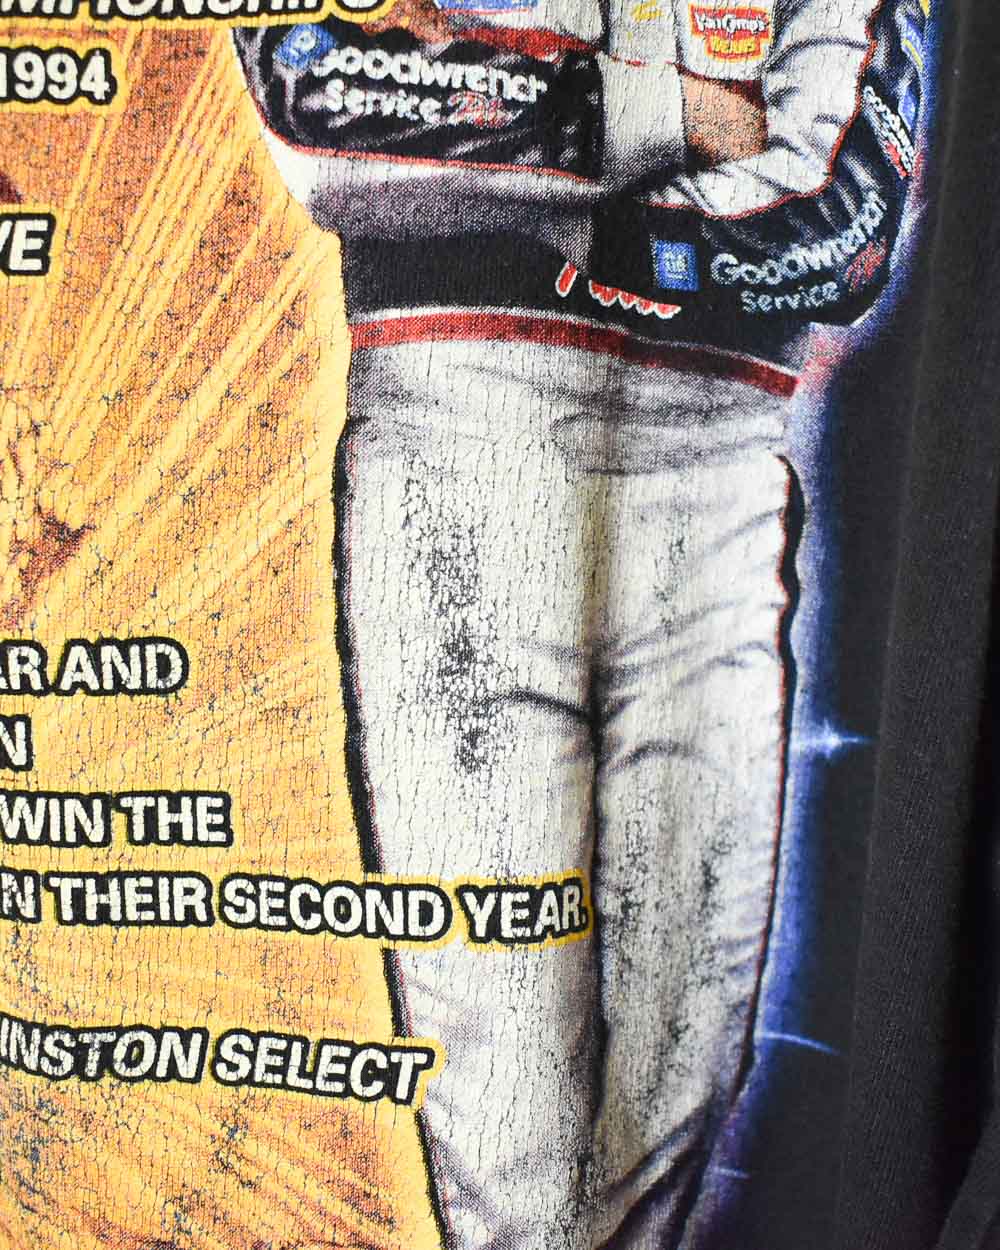 Black Chase Authentics Nascar Dale Earnhardt 7 Time Winston Cup Champion T-Shirt - XX-Large